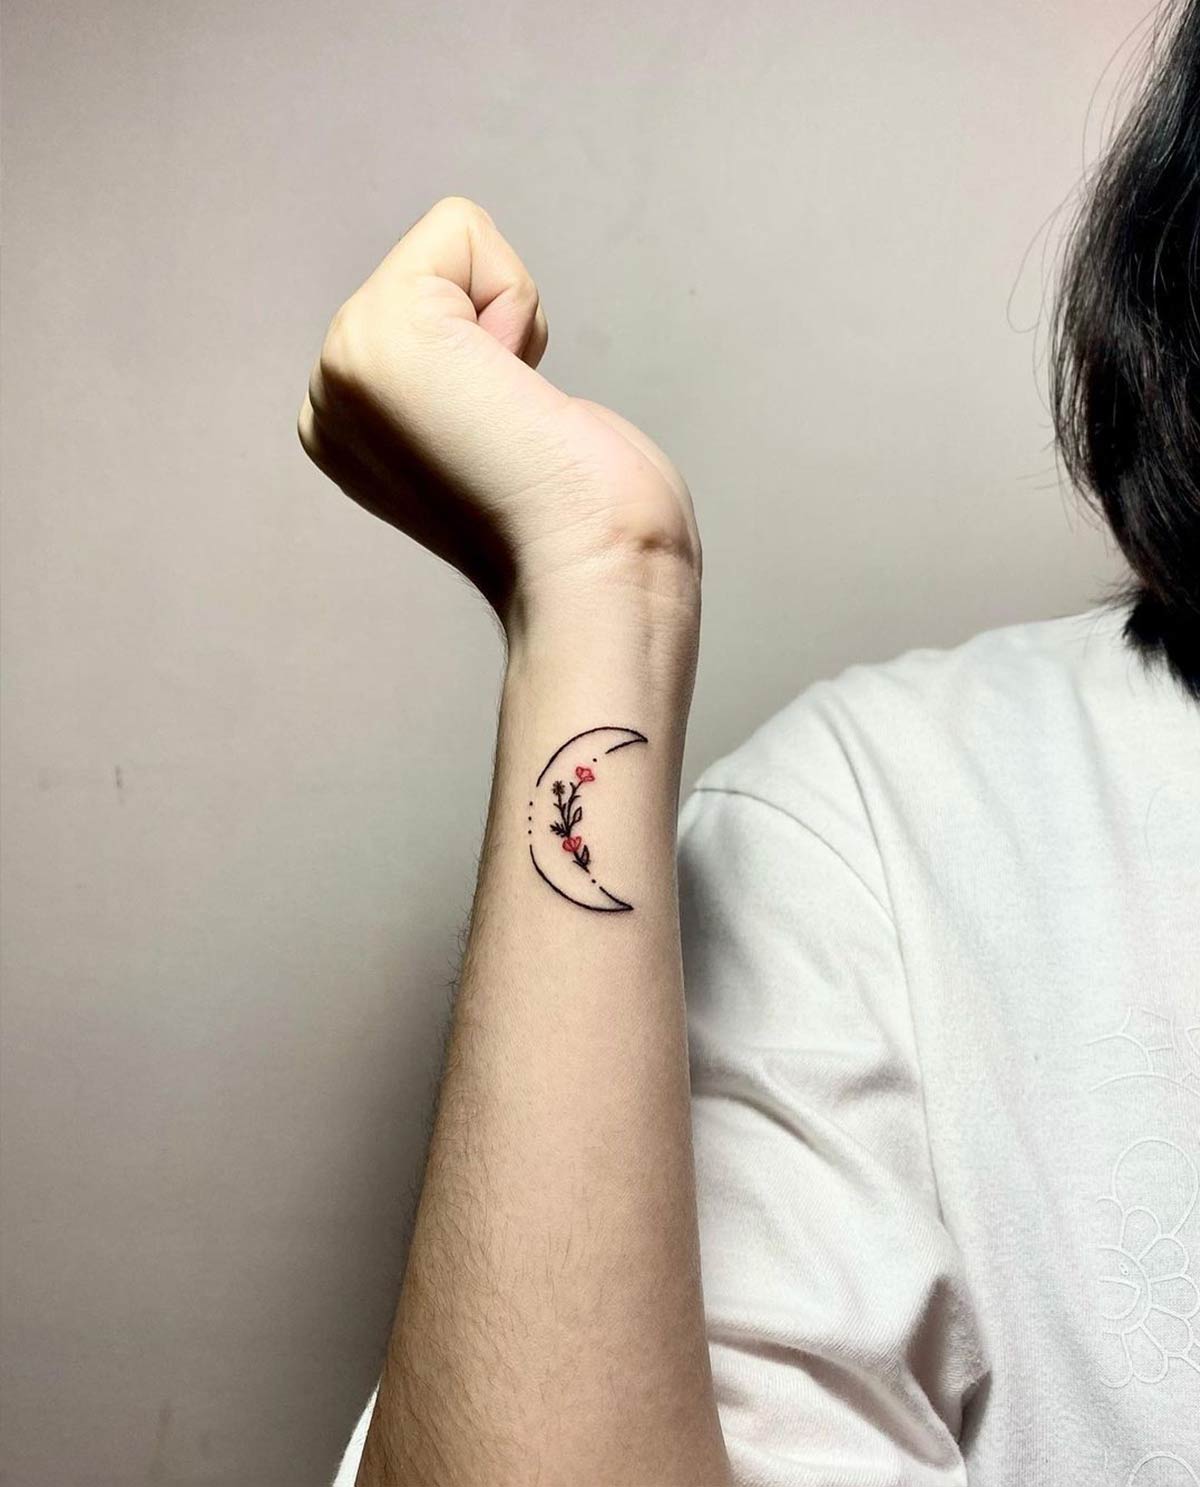 Tattoo tagged with small moon phase astronomy tiny ifttt little  michellesantana minimalist moon inner forearm  inkedappcom